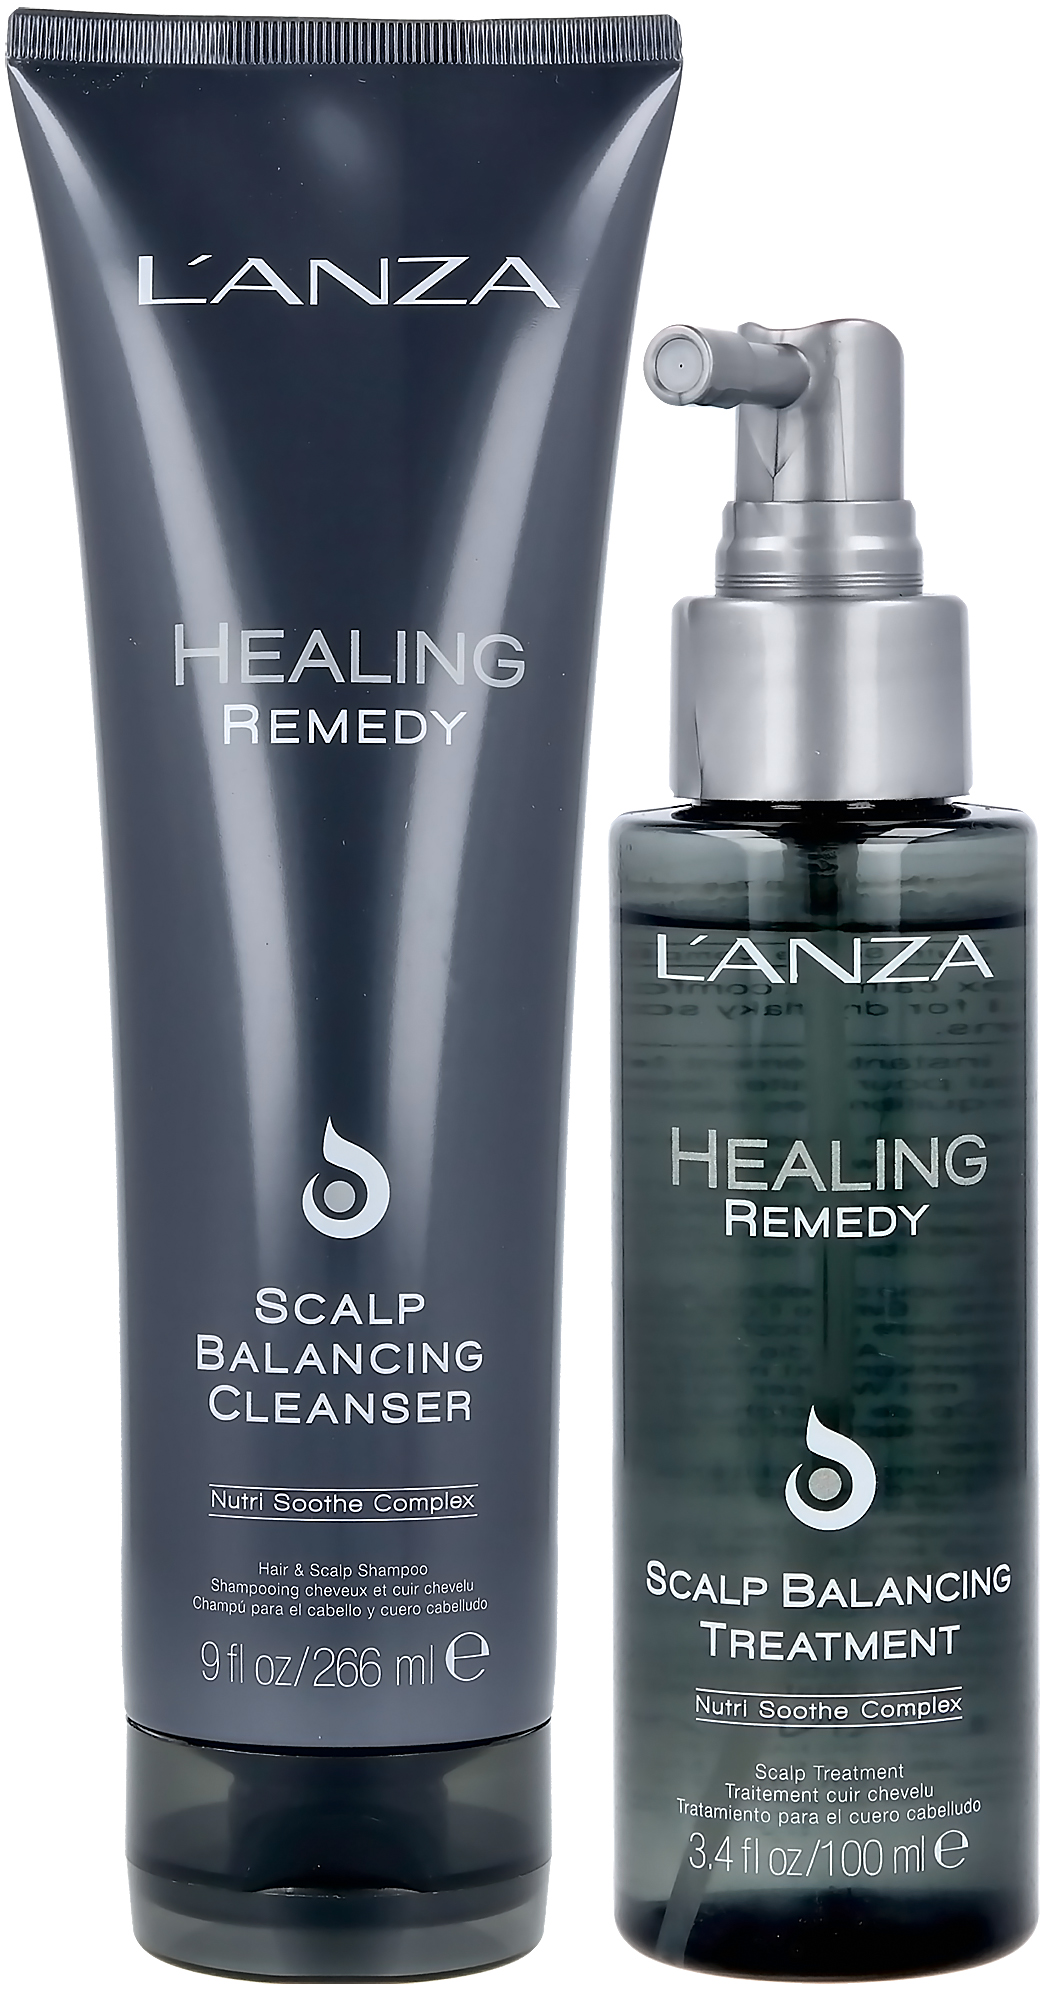 Lanza Healing Remedy Scalp Balancing Cleanser + Treatment